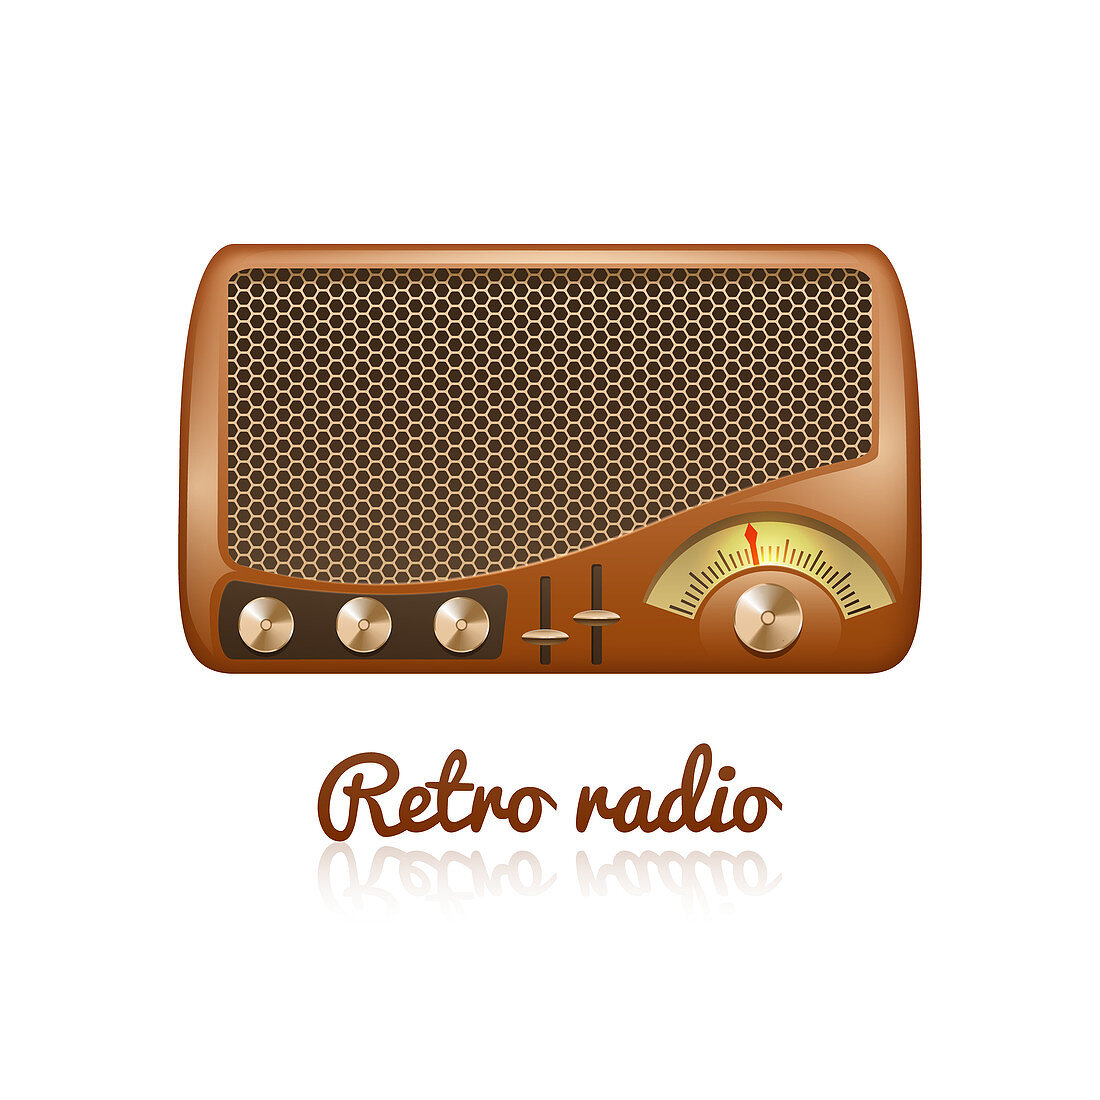 Retro radio, illustration